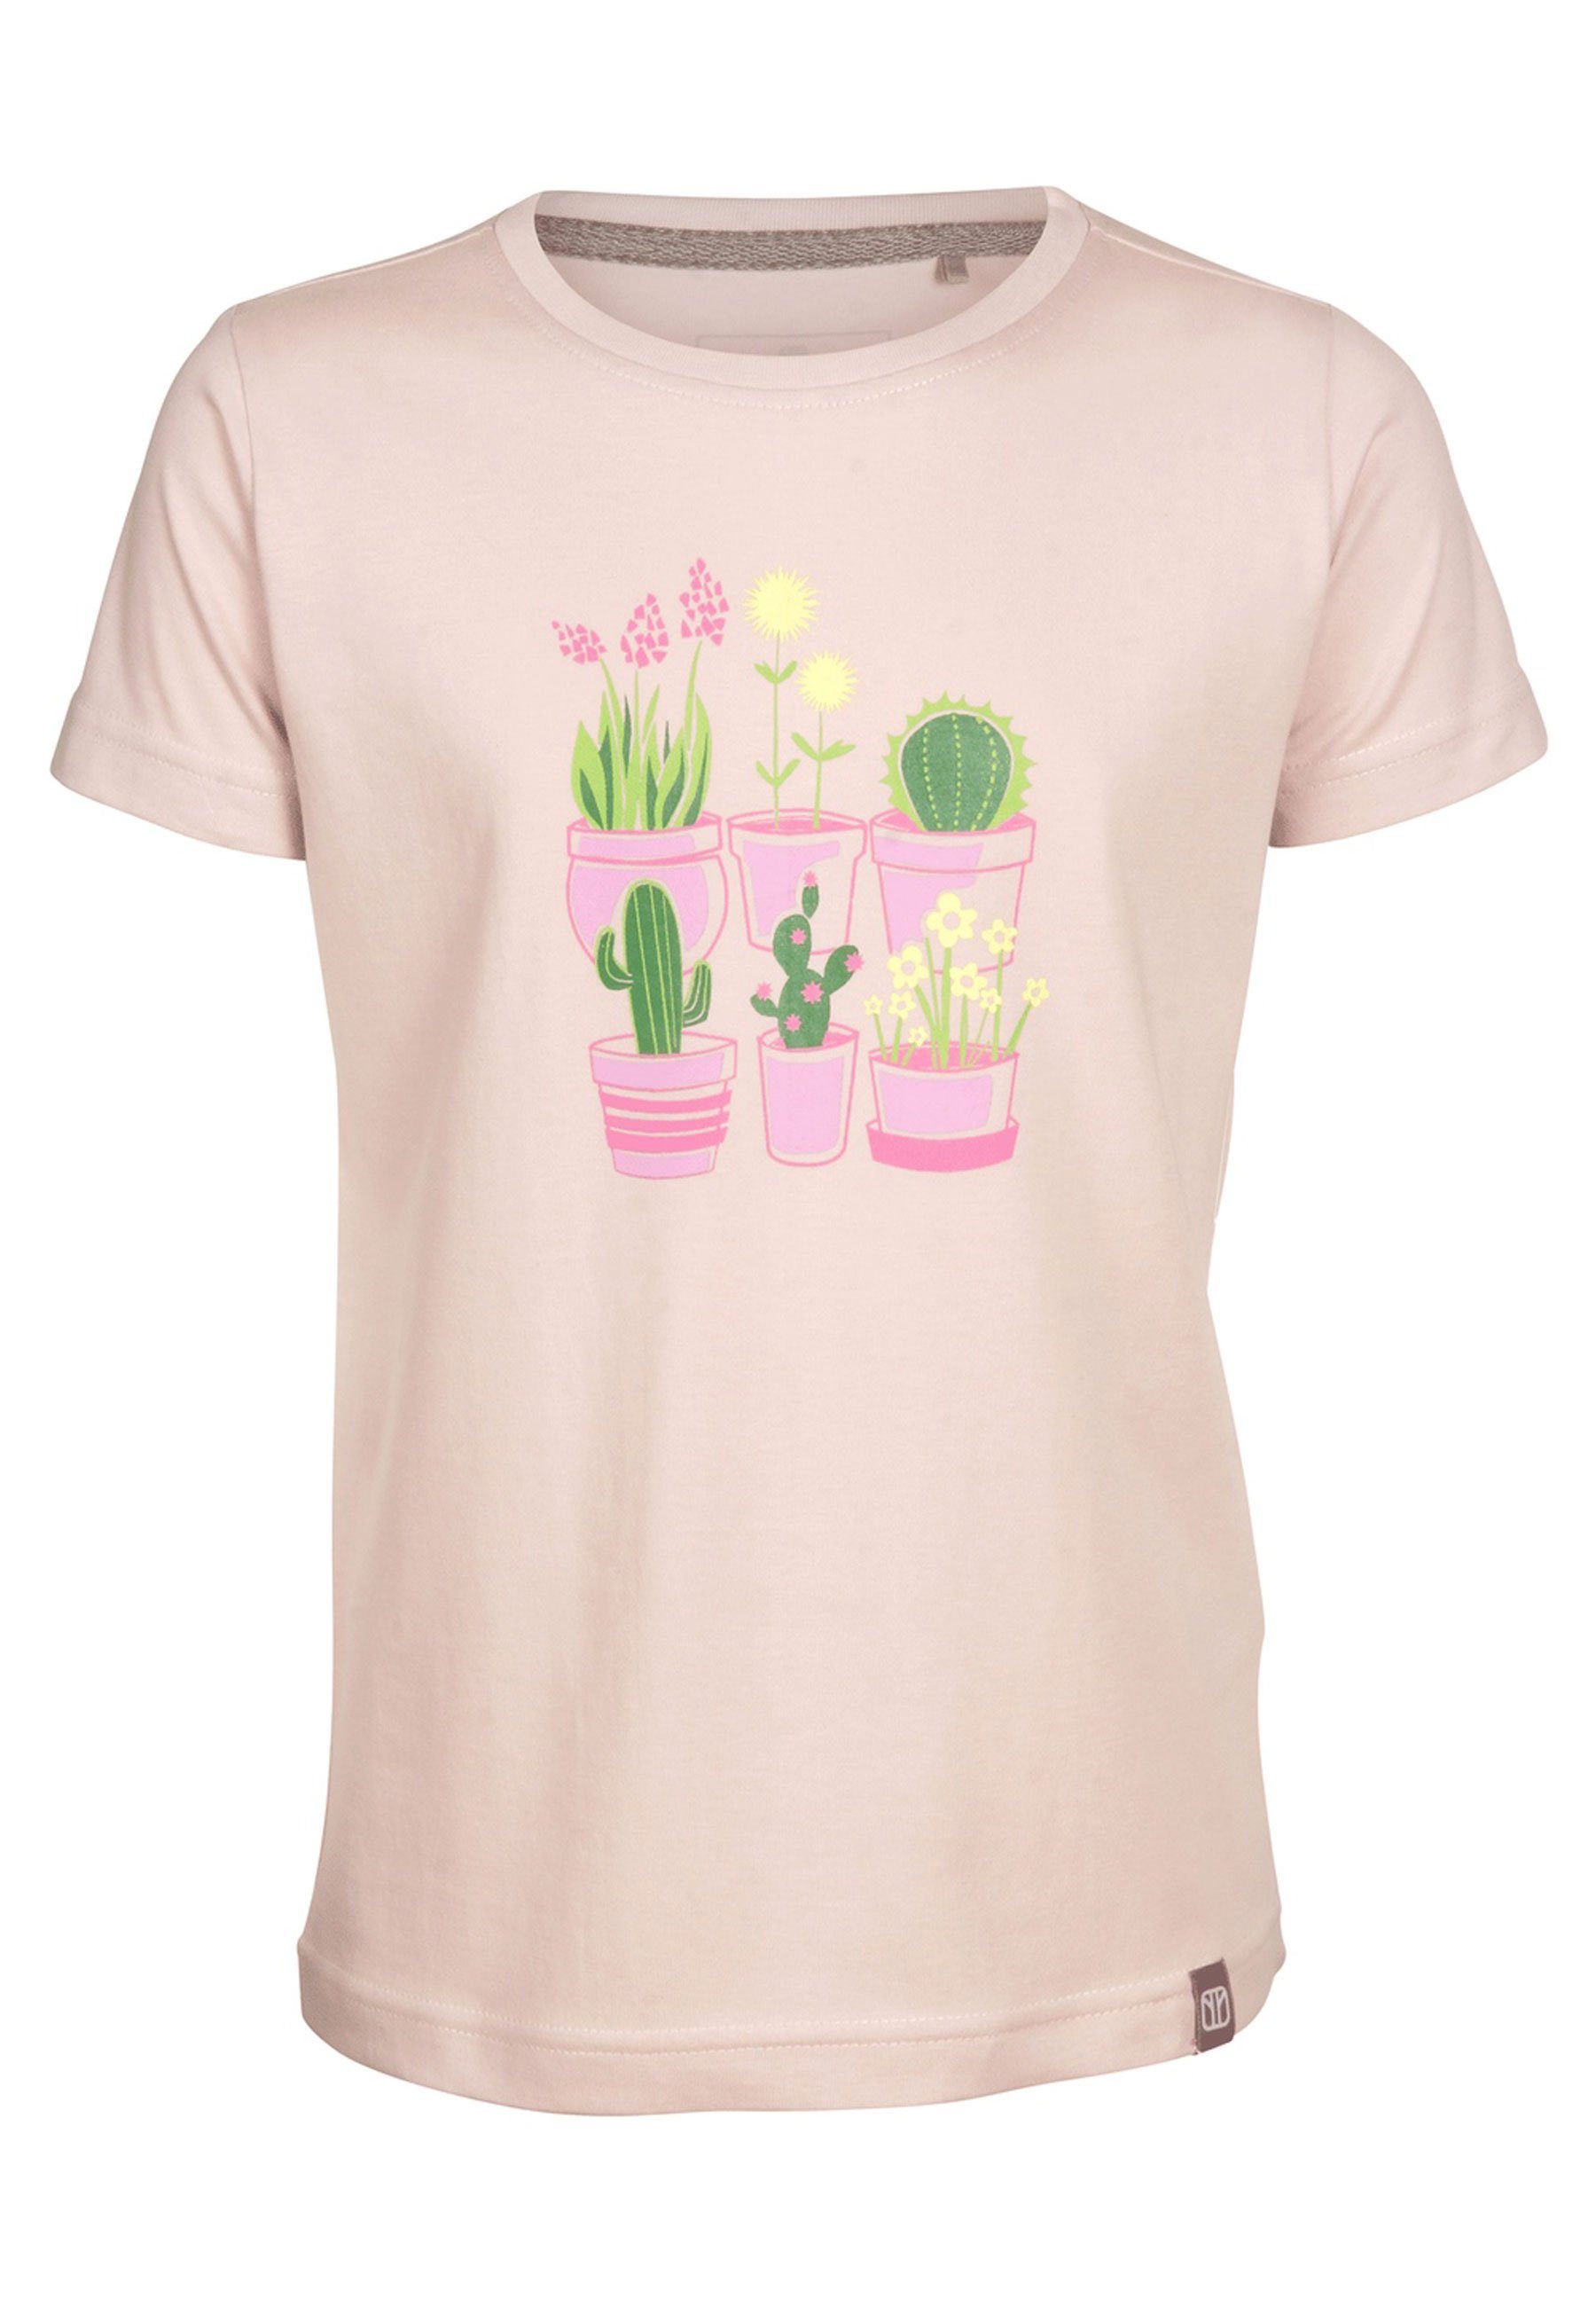 Elkline T-Shirt Plantsarefriends Jersey Kurzarm Blumen Kaktus Brust Print softstone